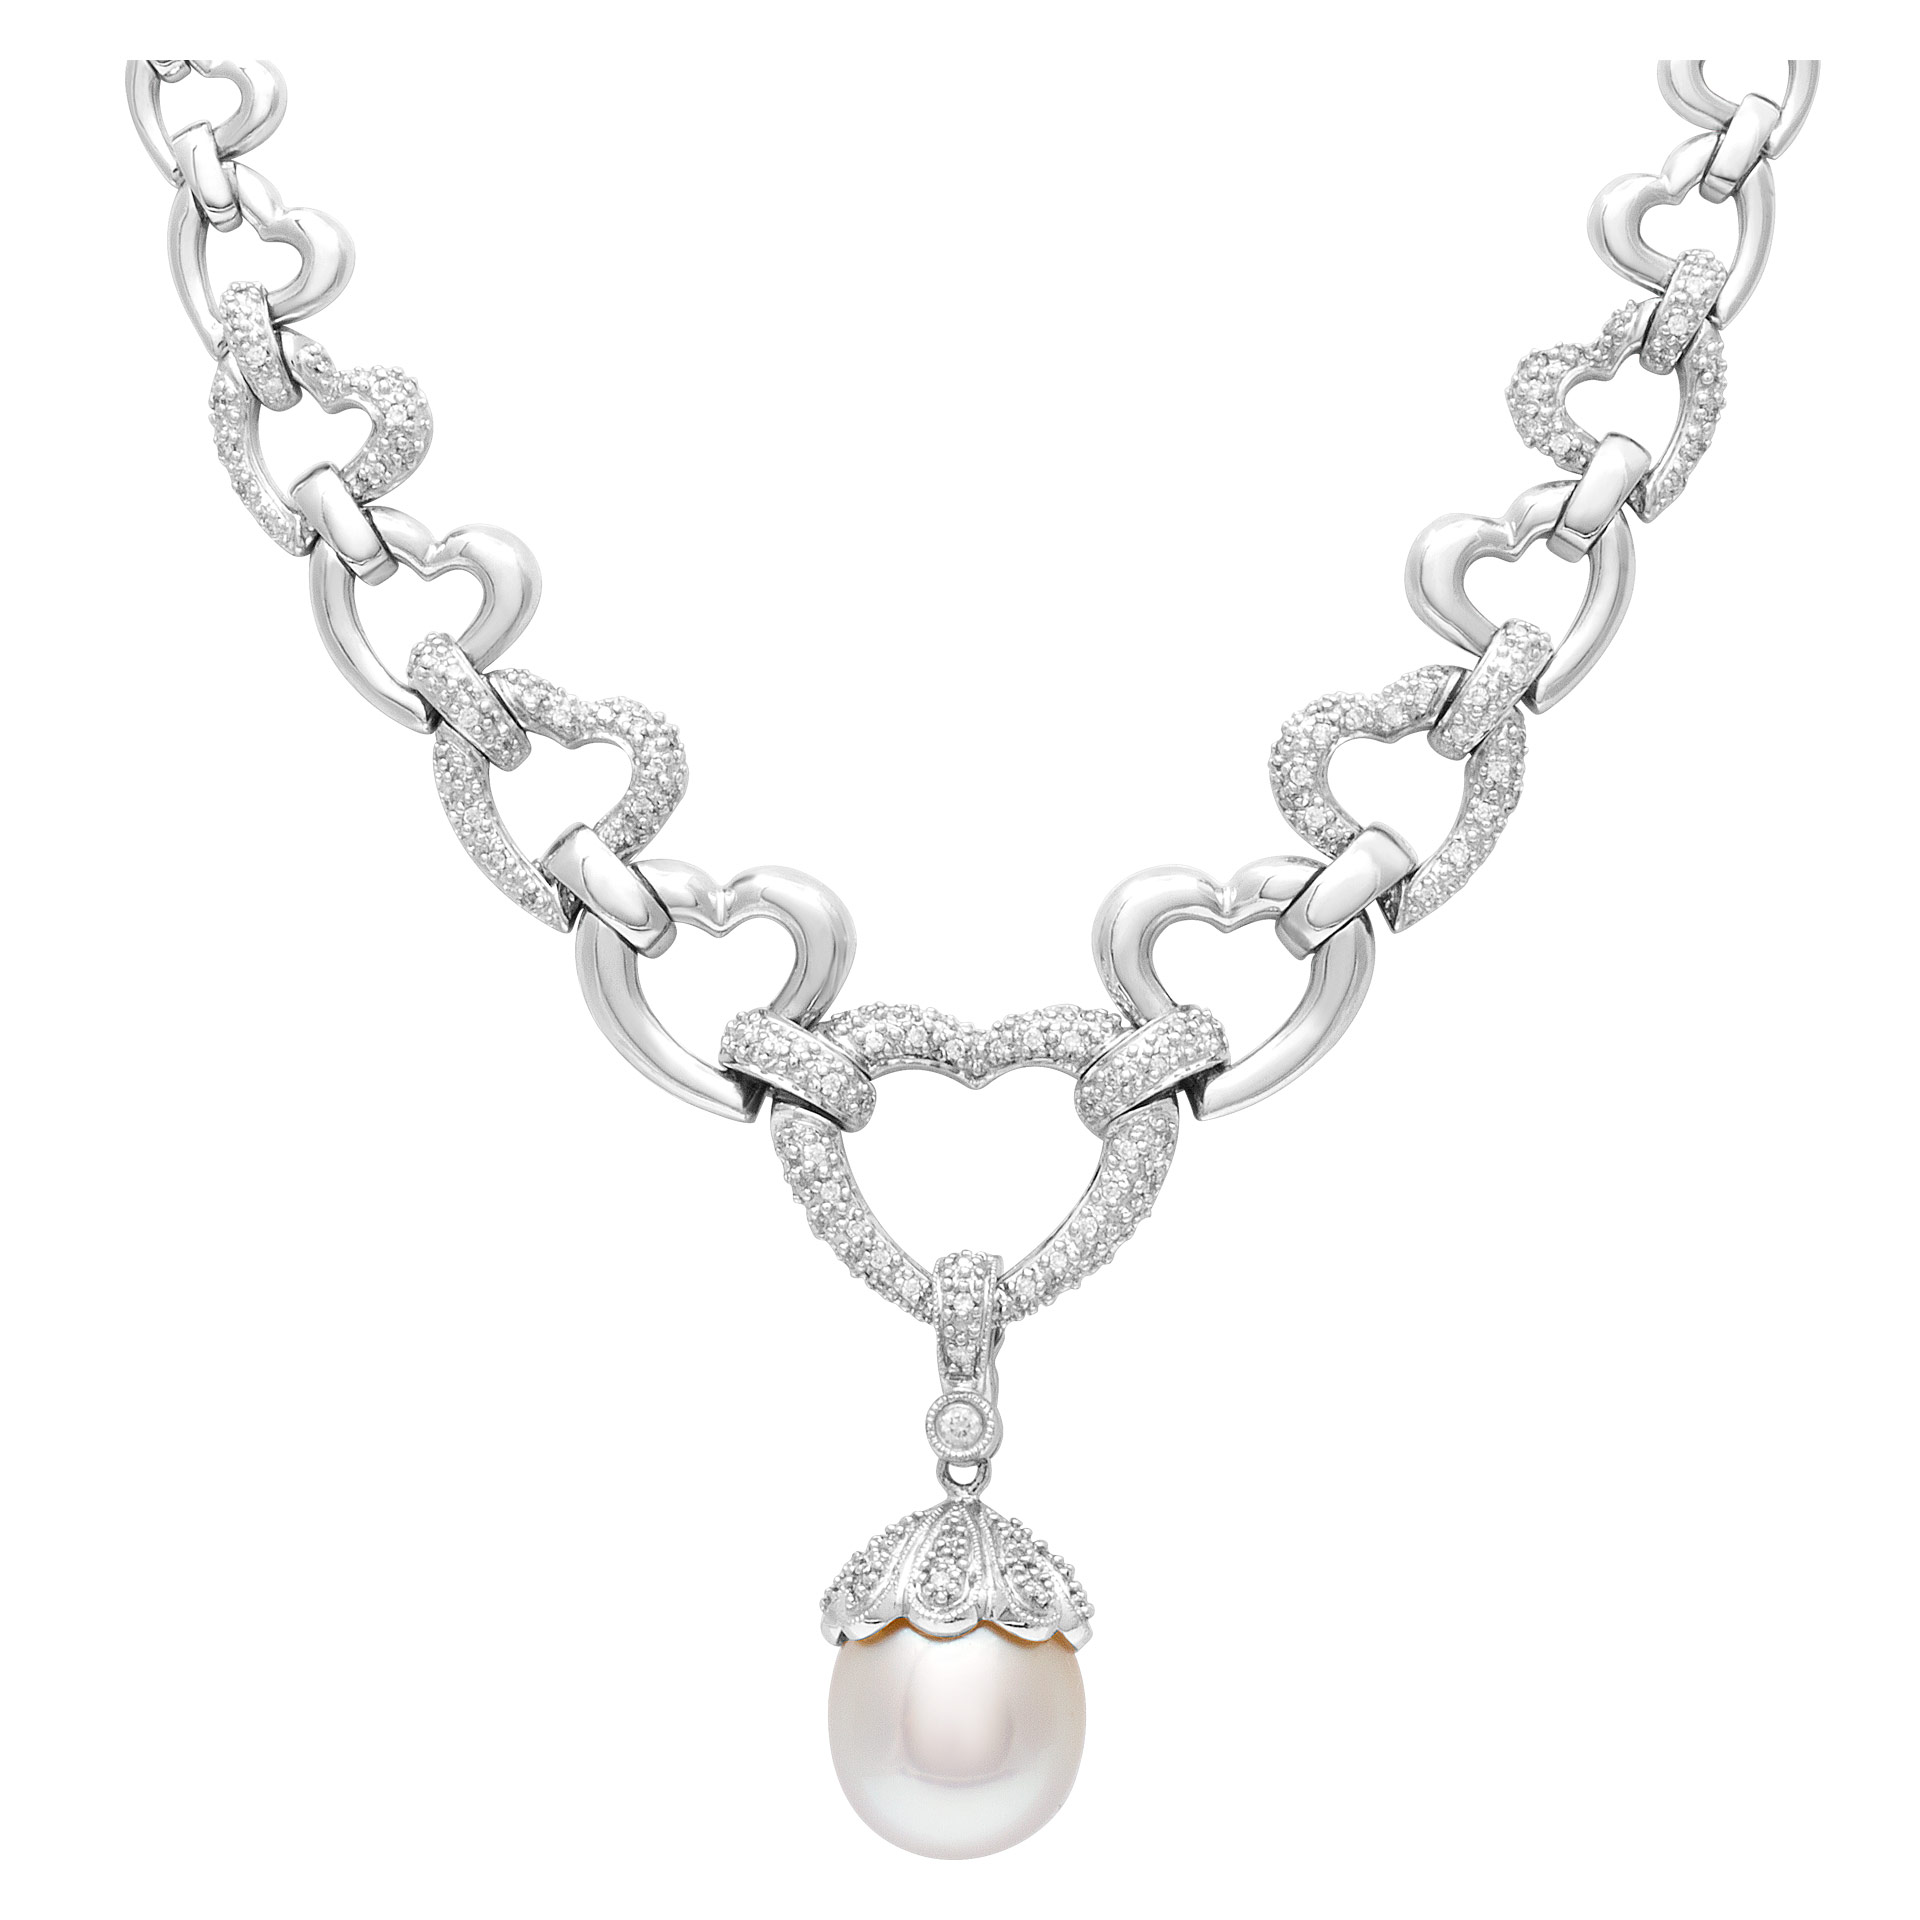 South Sea pearl & diamonds heart links necklace, in 14k white gold. South Sea pearl: 12 x 12.5mm, over 1.00 round brilliant cut diamonds